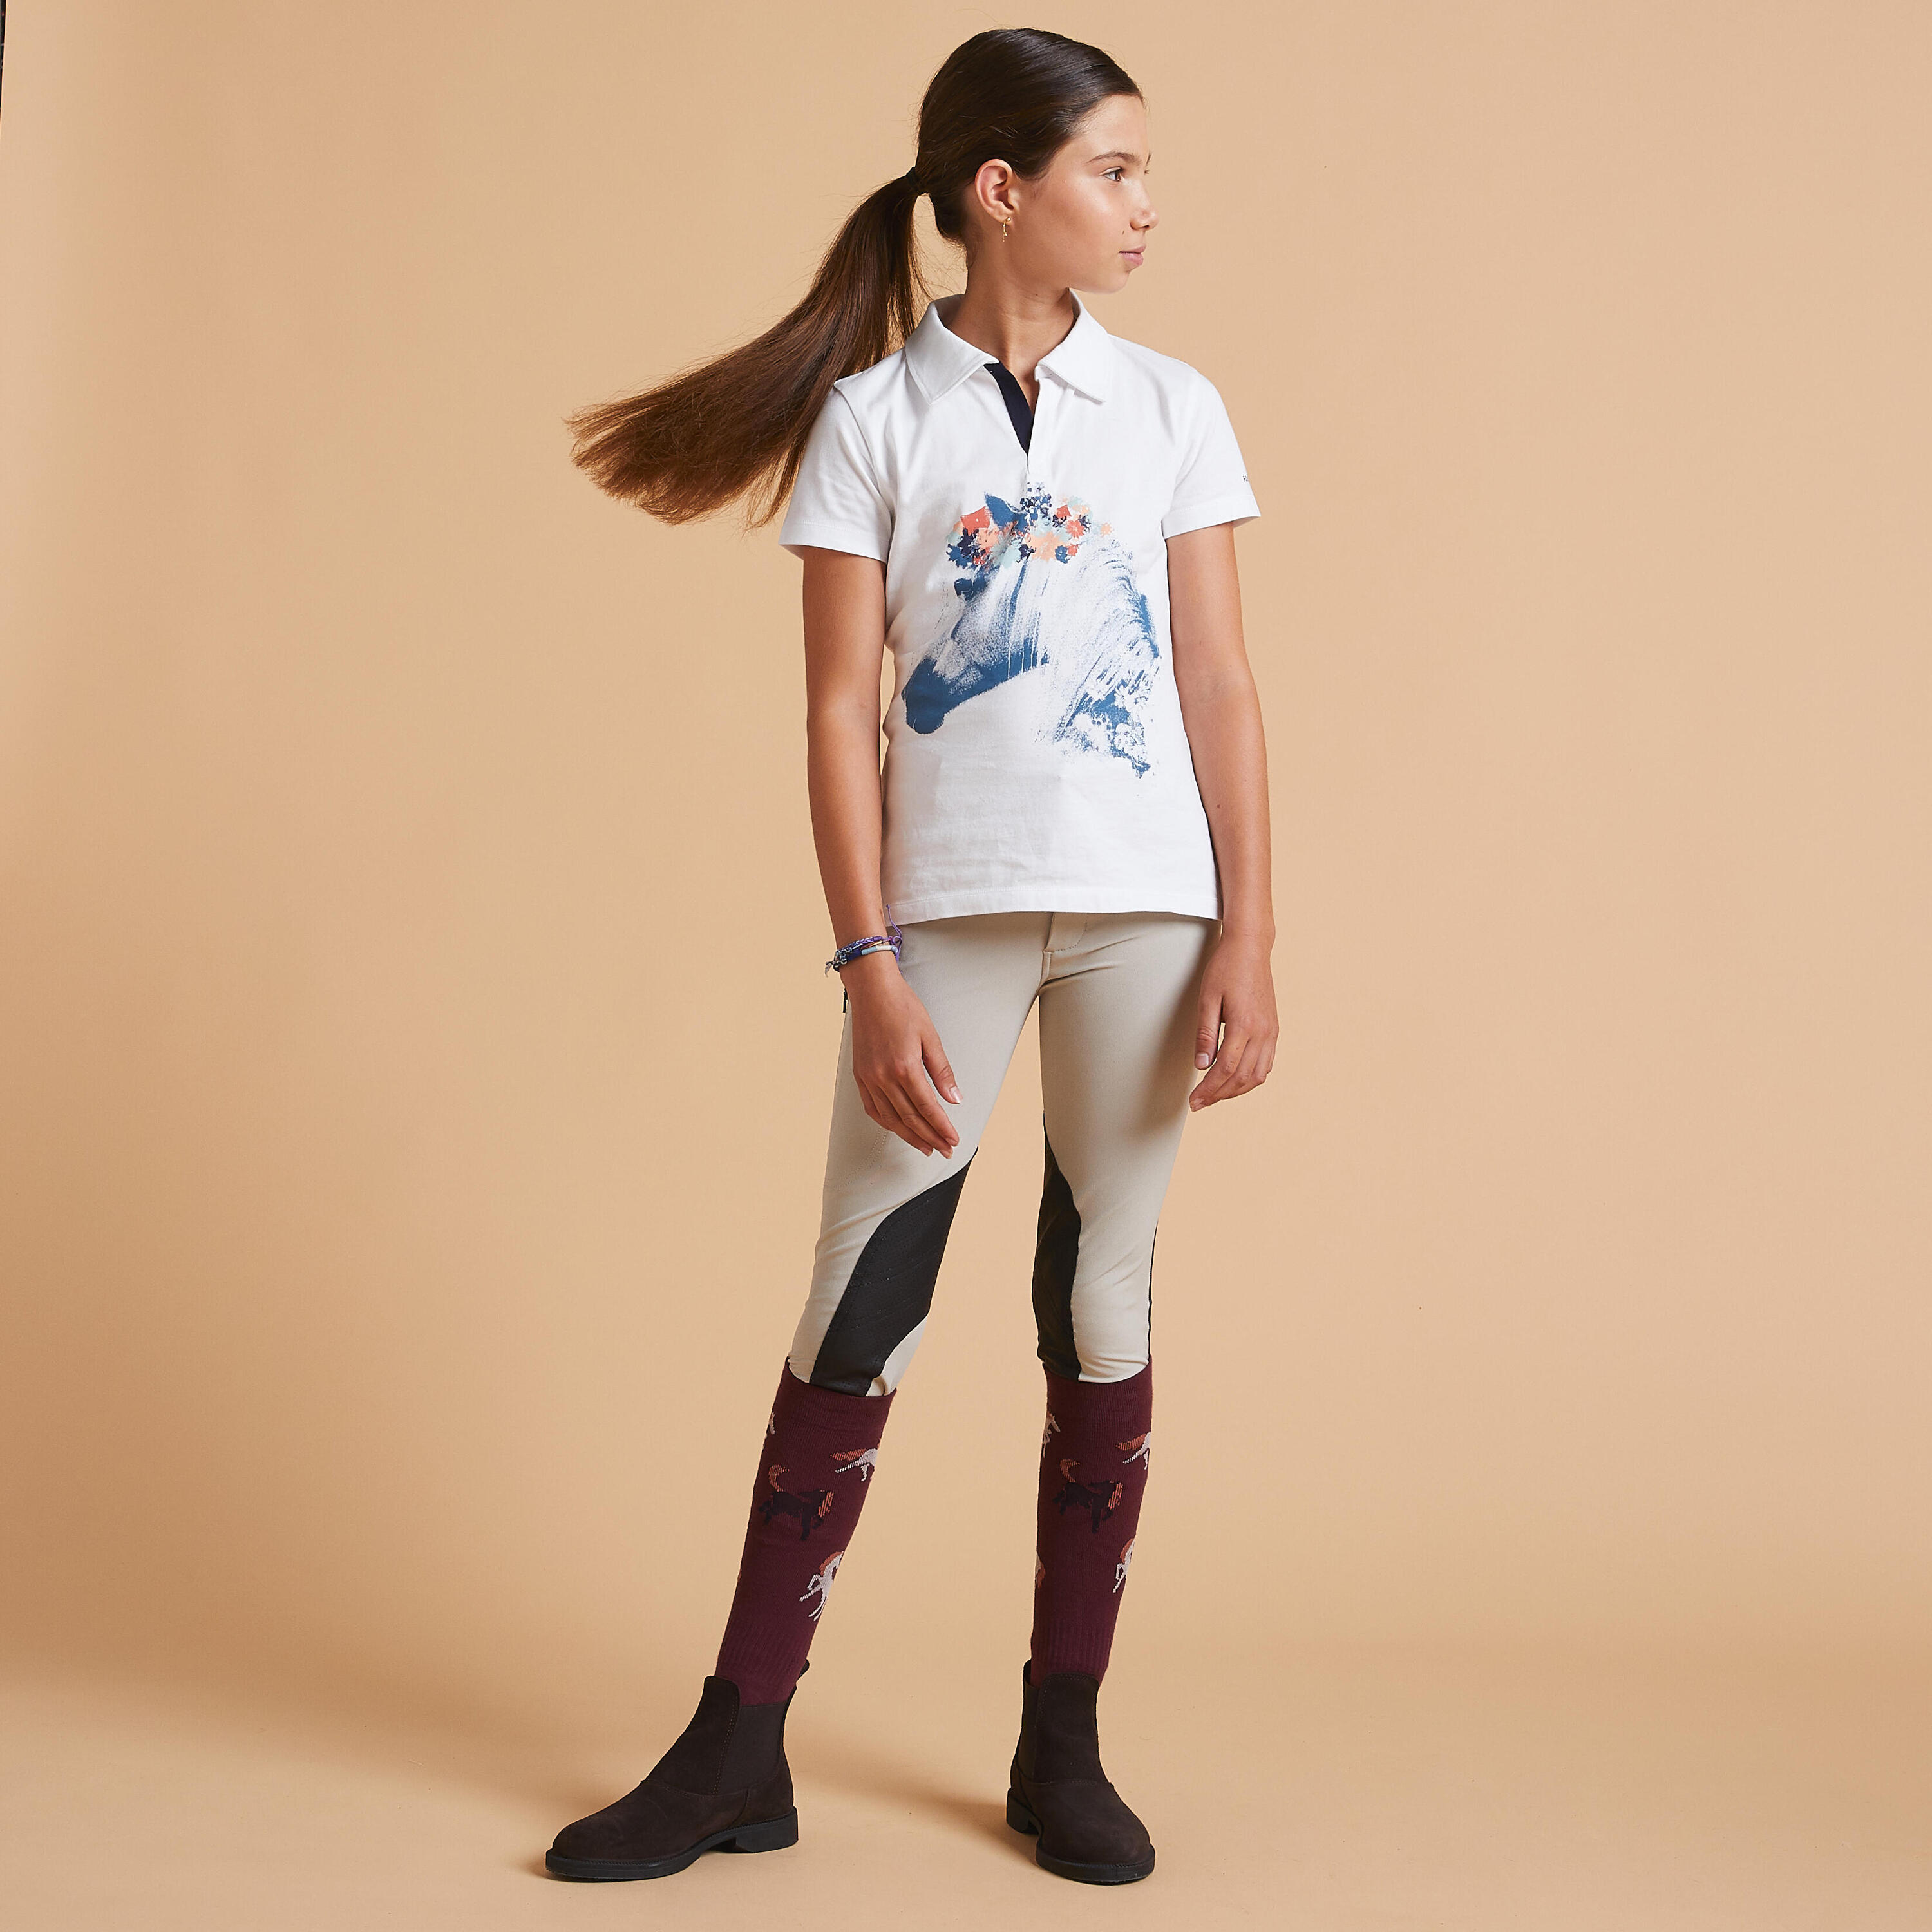 Kids' Short-Sleeved Horse Riding Polo Shirt 100 - White 2/3